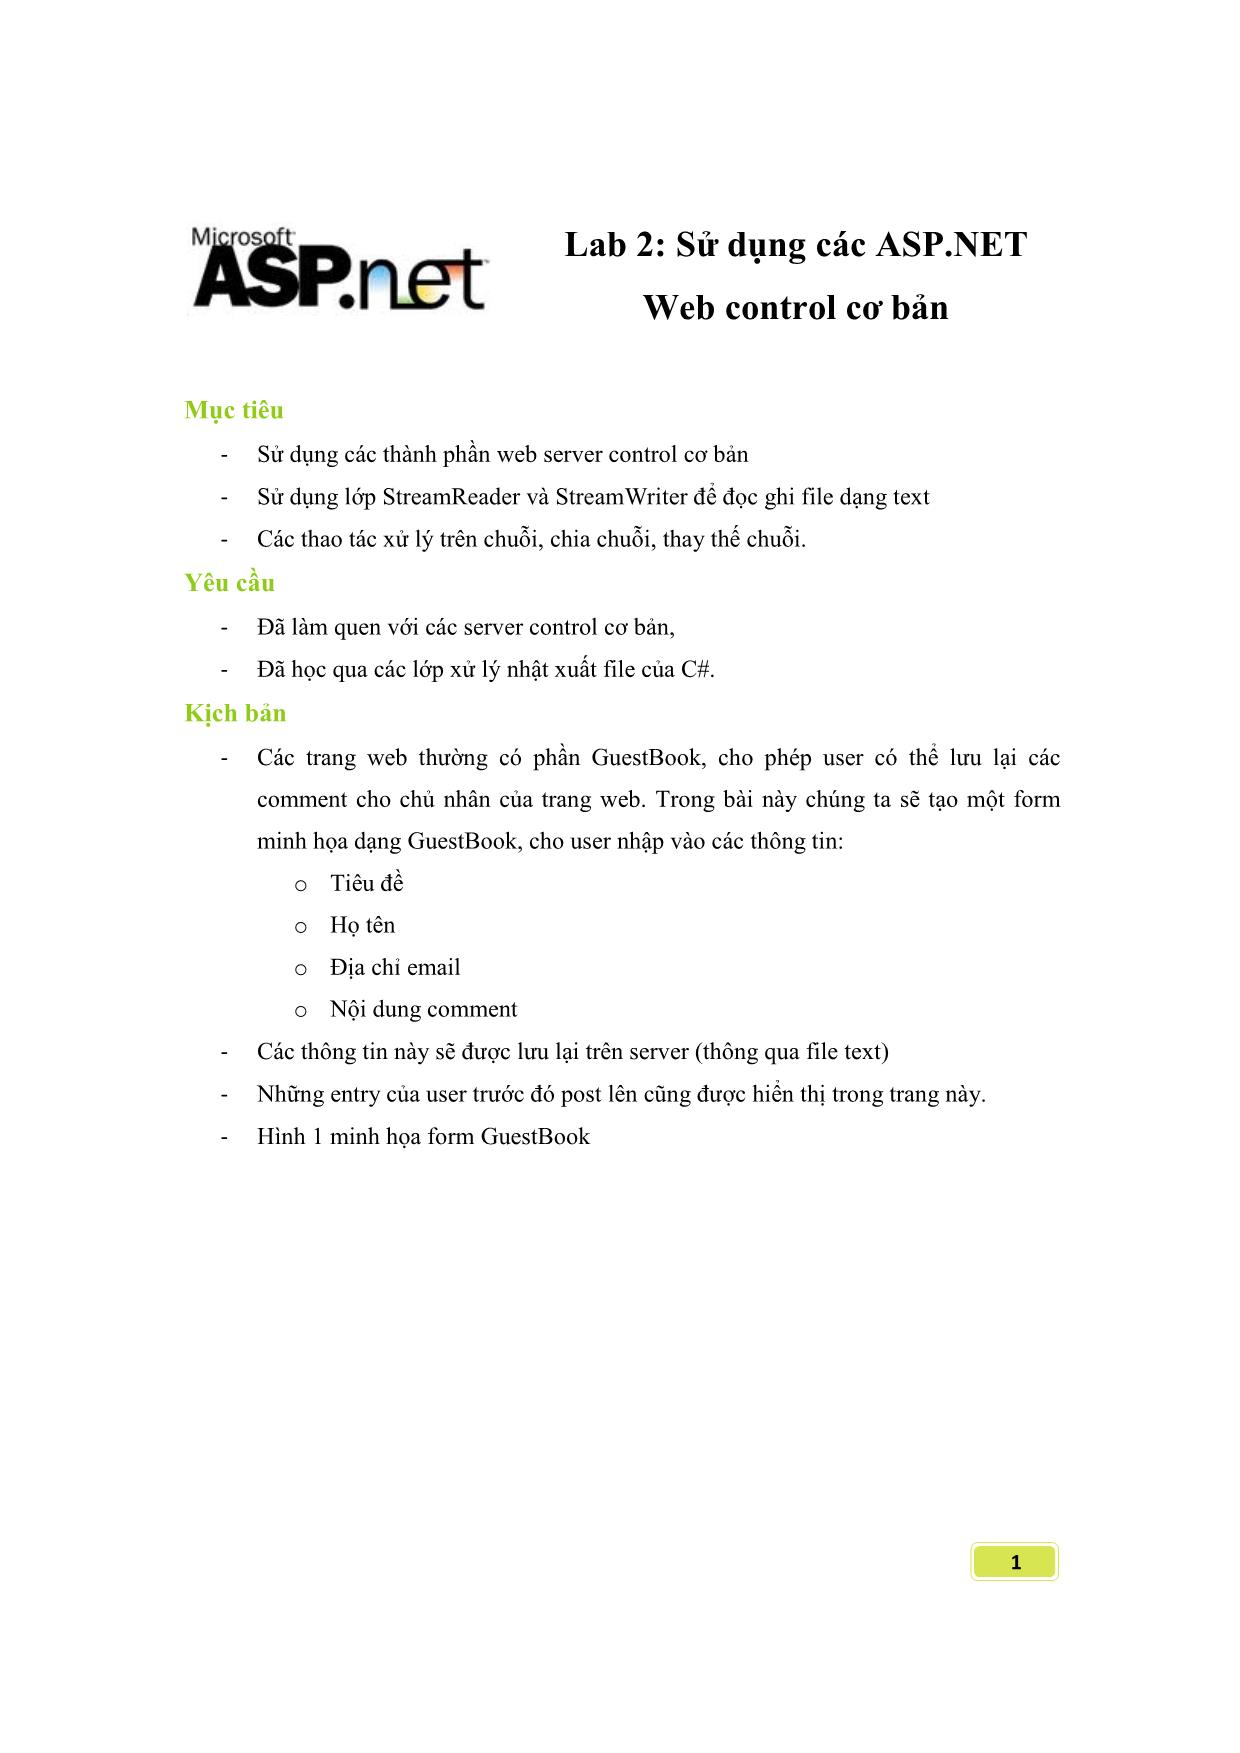 Sử dụng các ASP.NET Web control cơ bản trang 1